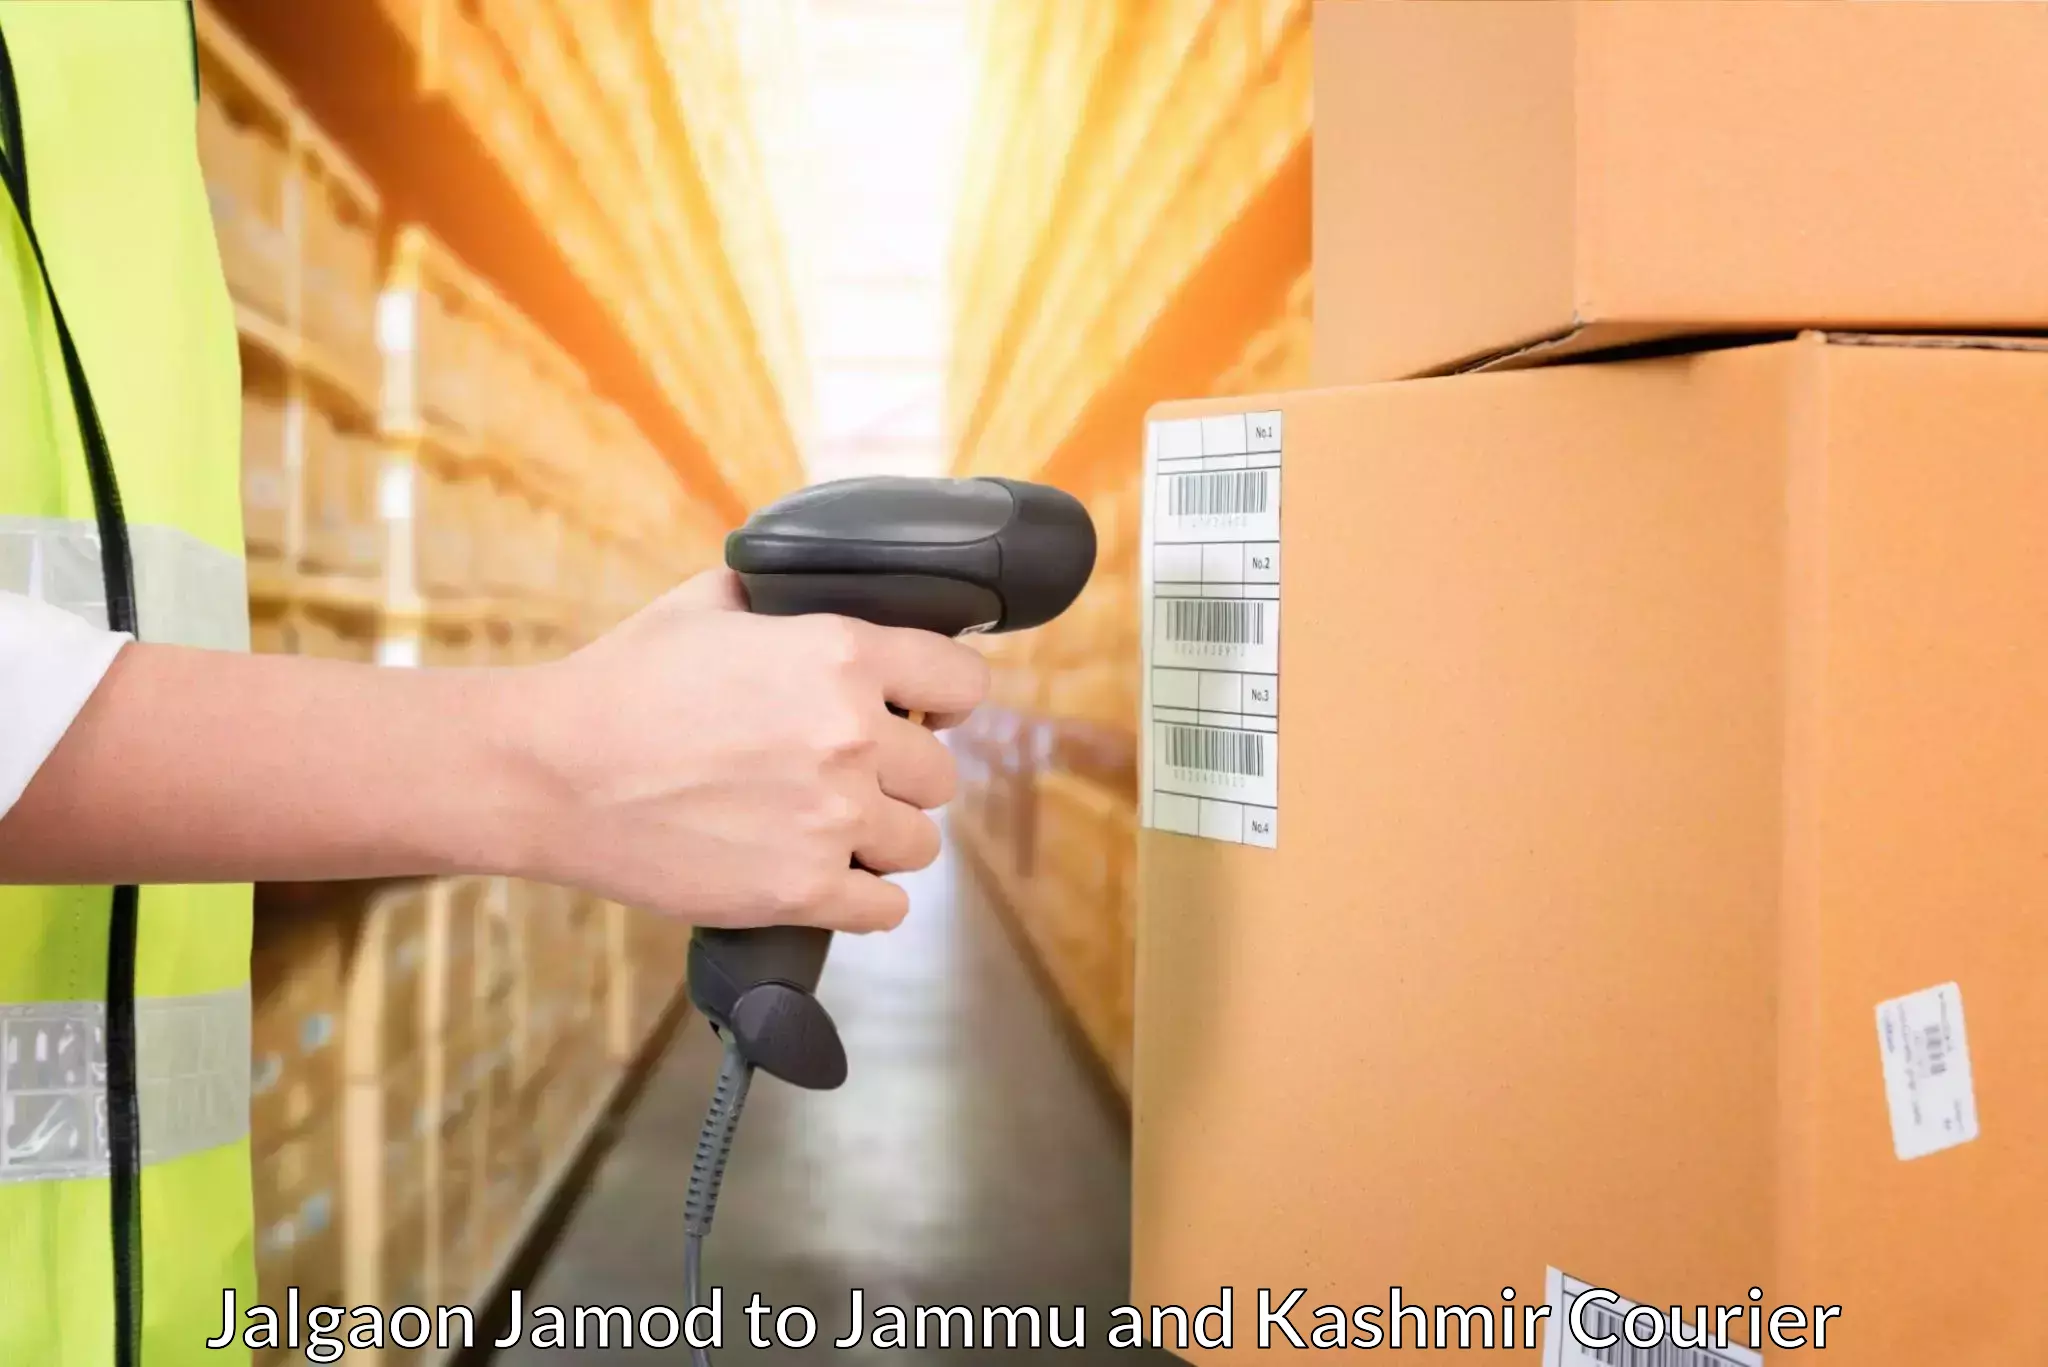 Premium courier services Jalgaon Jamod to Srinagar Kashmir